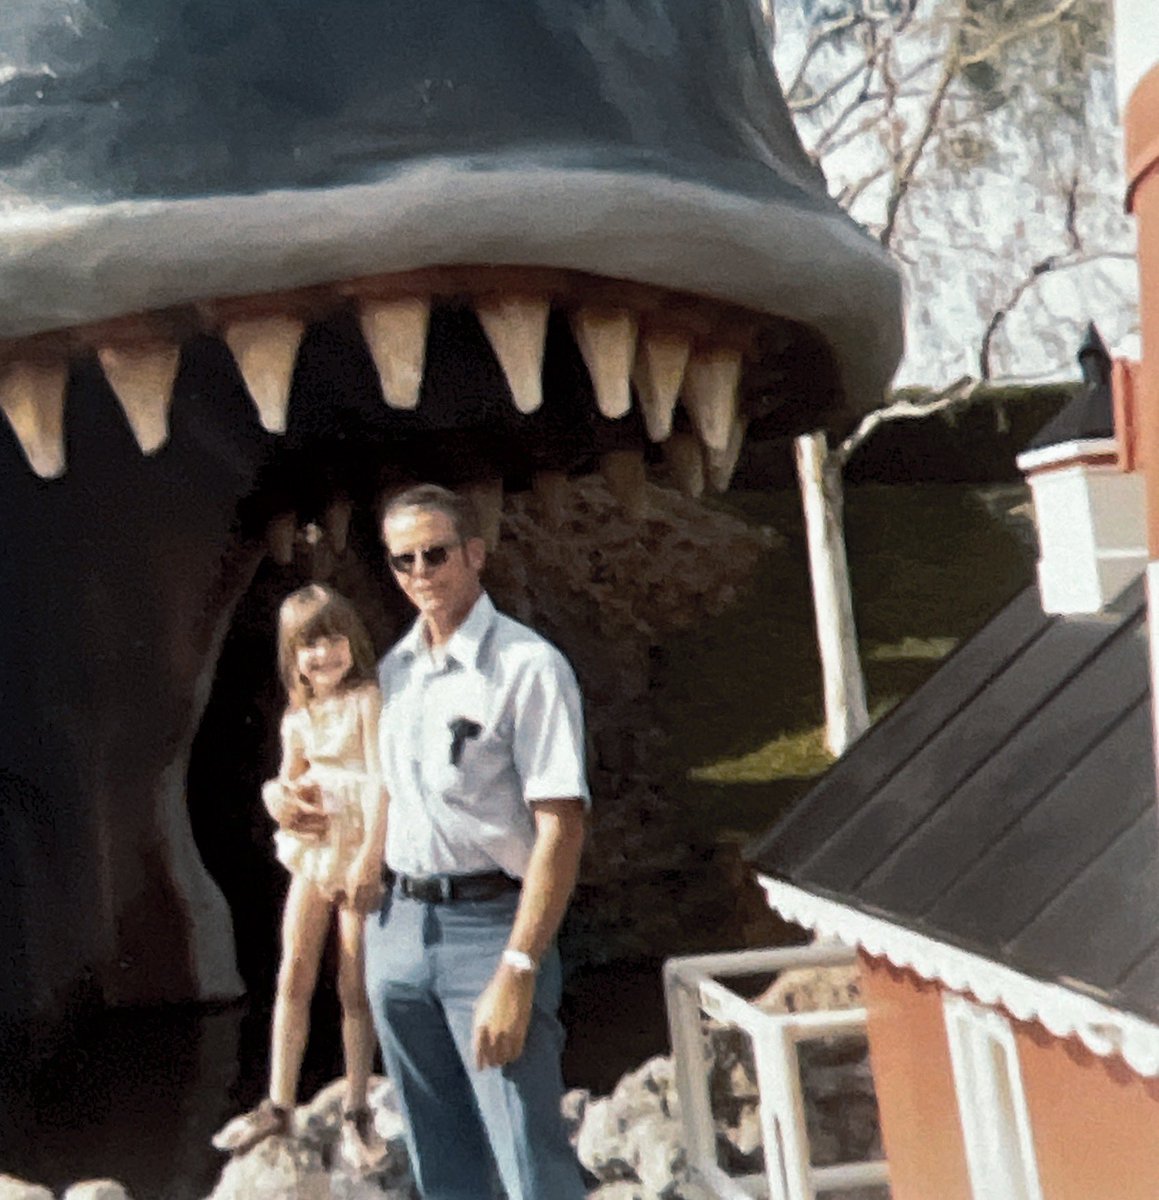 Dad and I at Disneyland. I think it’s 1972. #missmydad